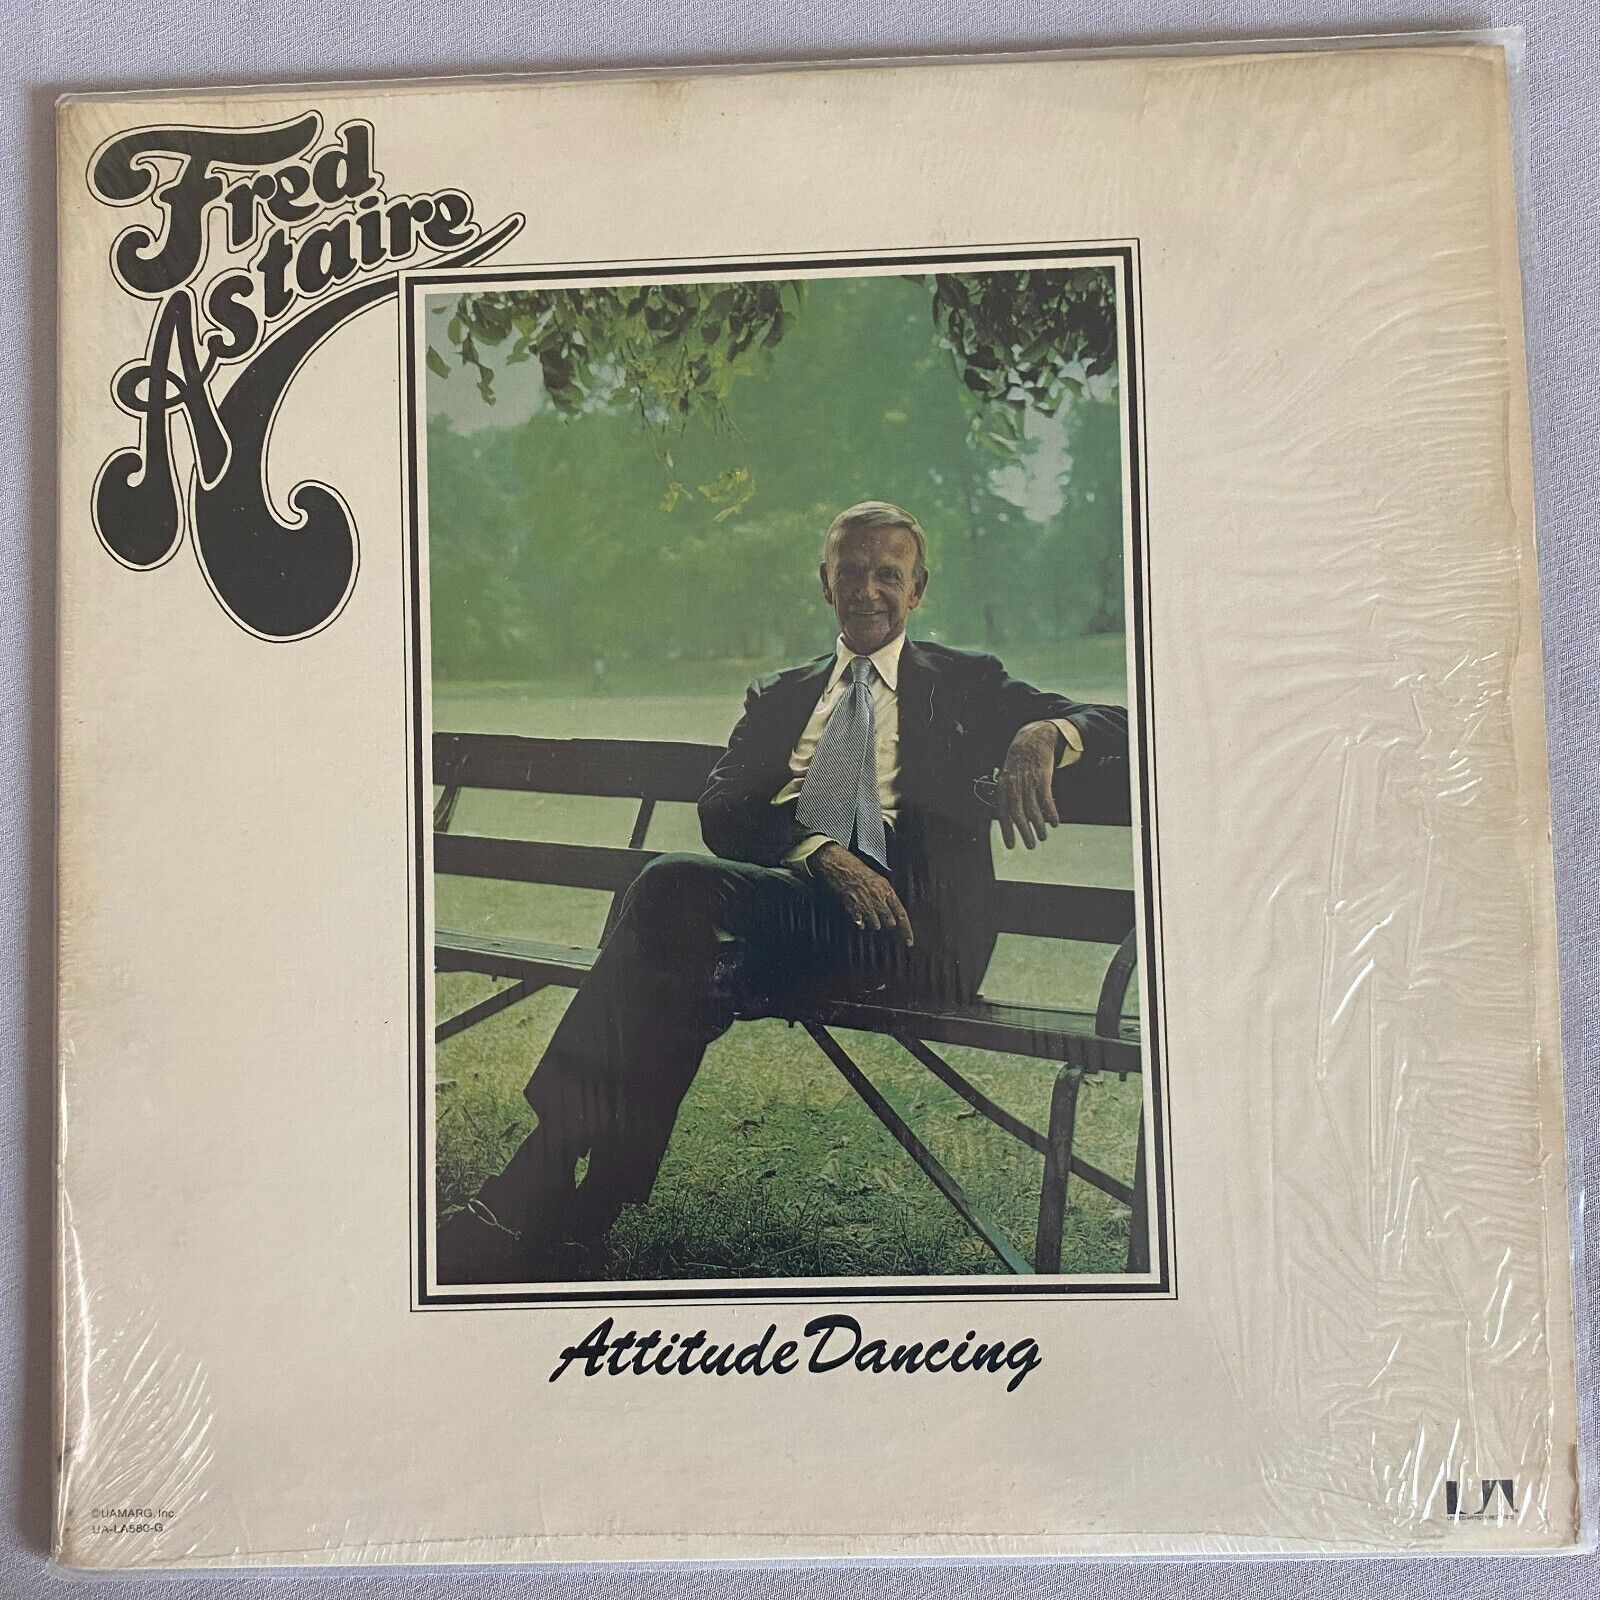 NEW VINTAGE Fred Astaire Attitude Dancing LP United Artists UA-LA580 1976 Vinyl